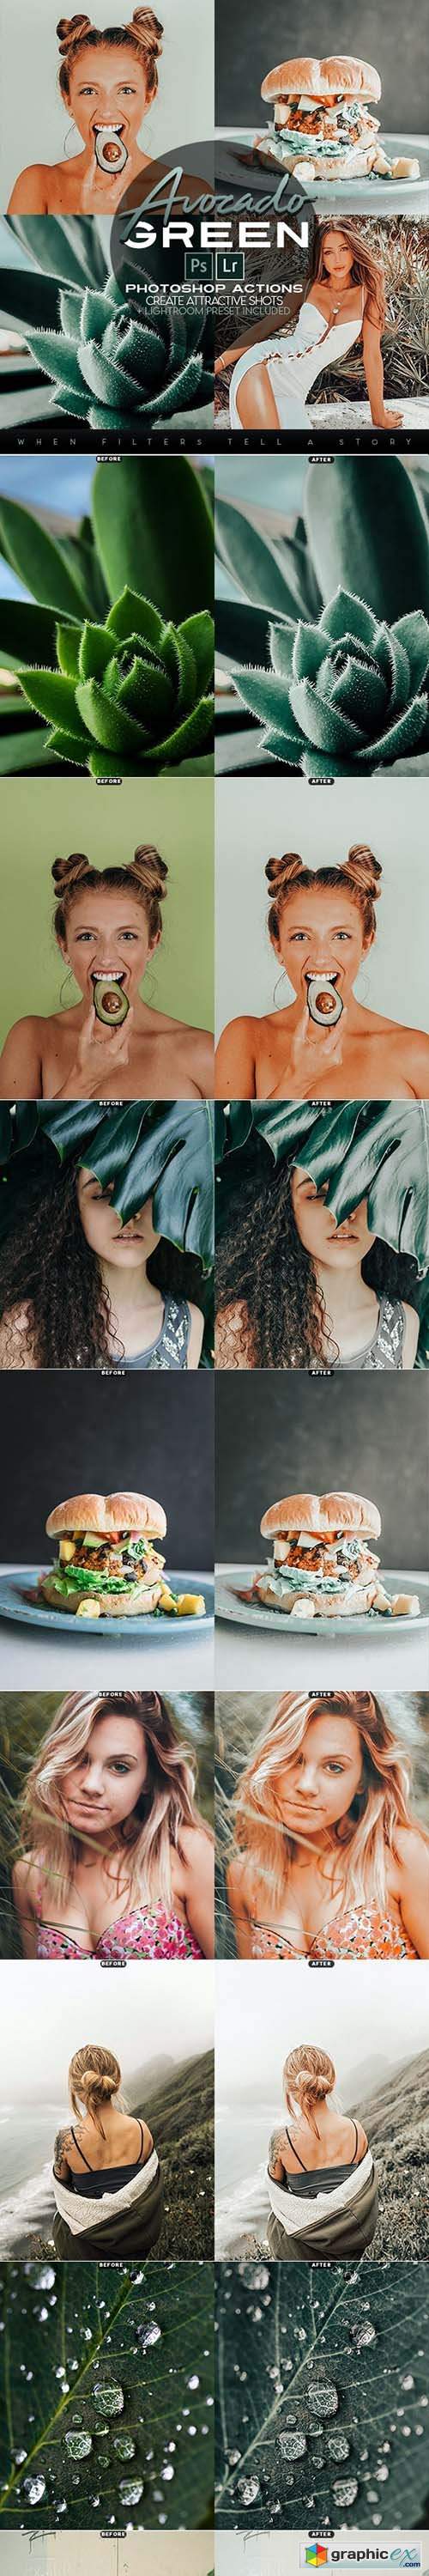 Avocado Green Photoshop Actions + LR Presets 